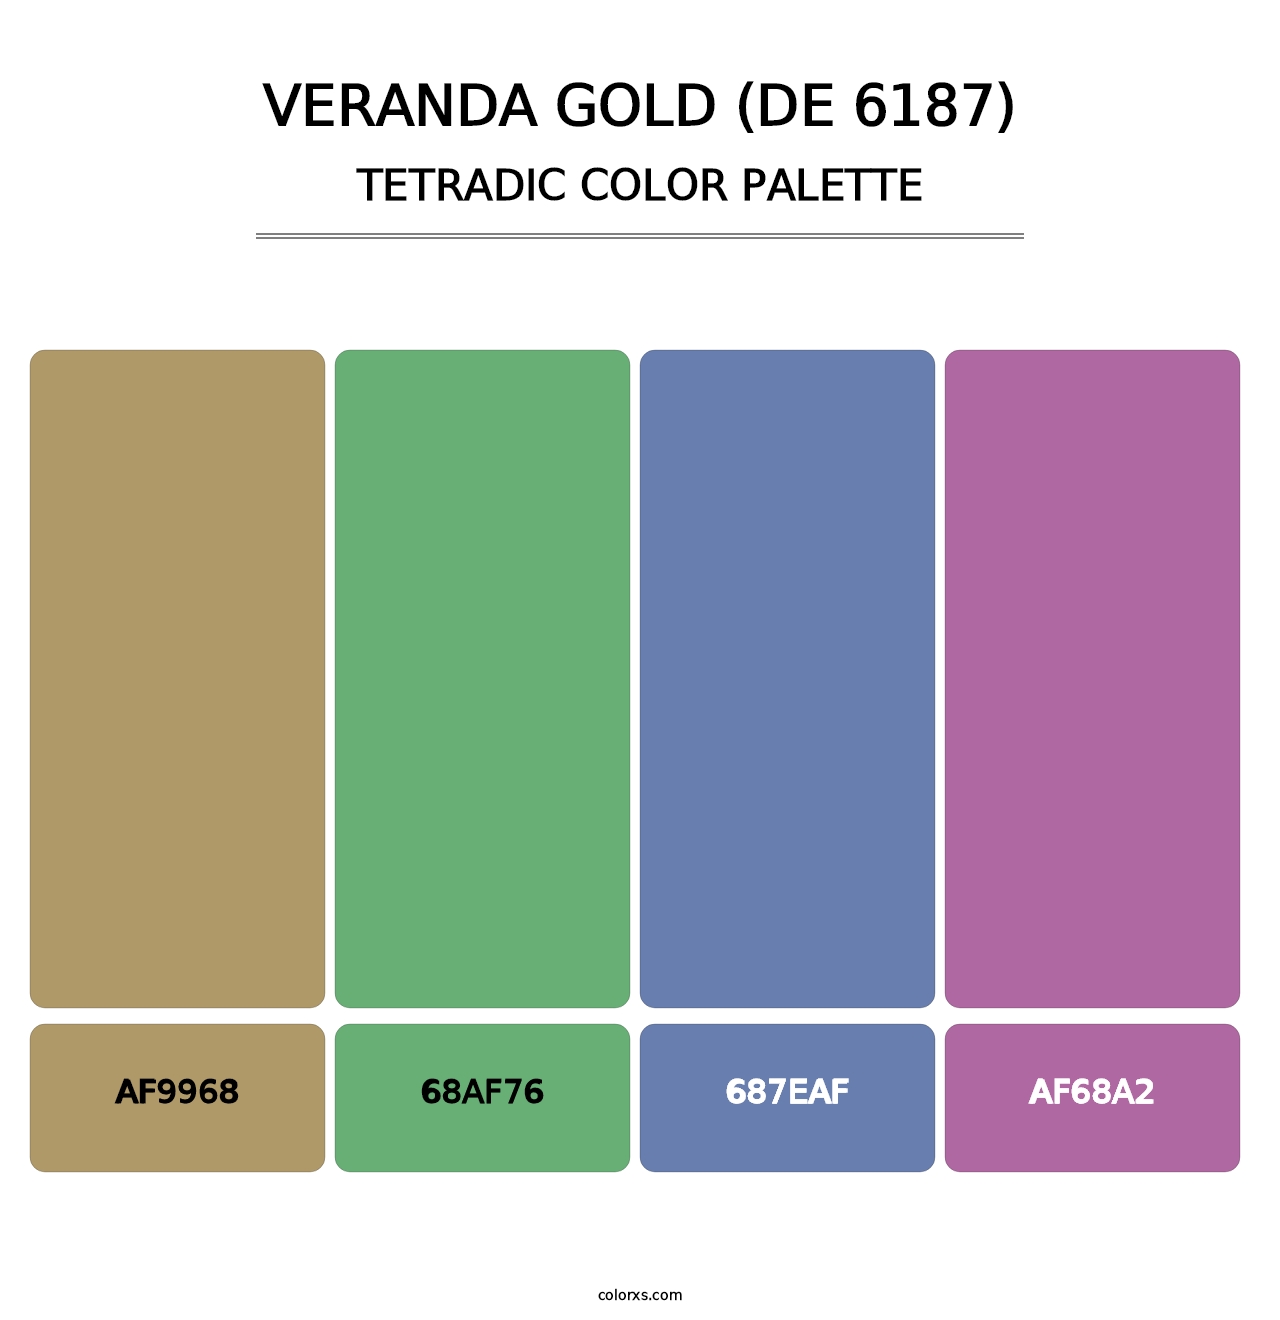 Veranda Gold (DE 6187) - Tetradic Color Palette